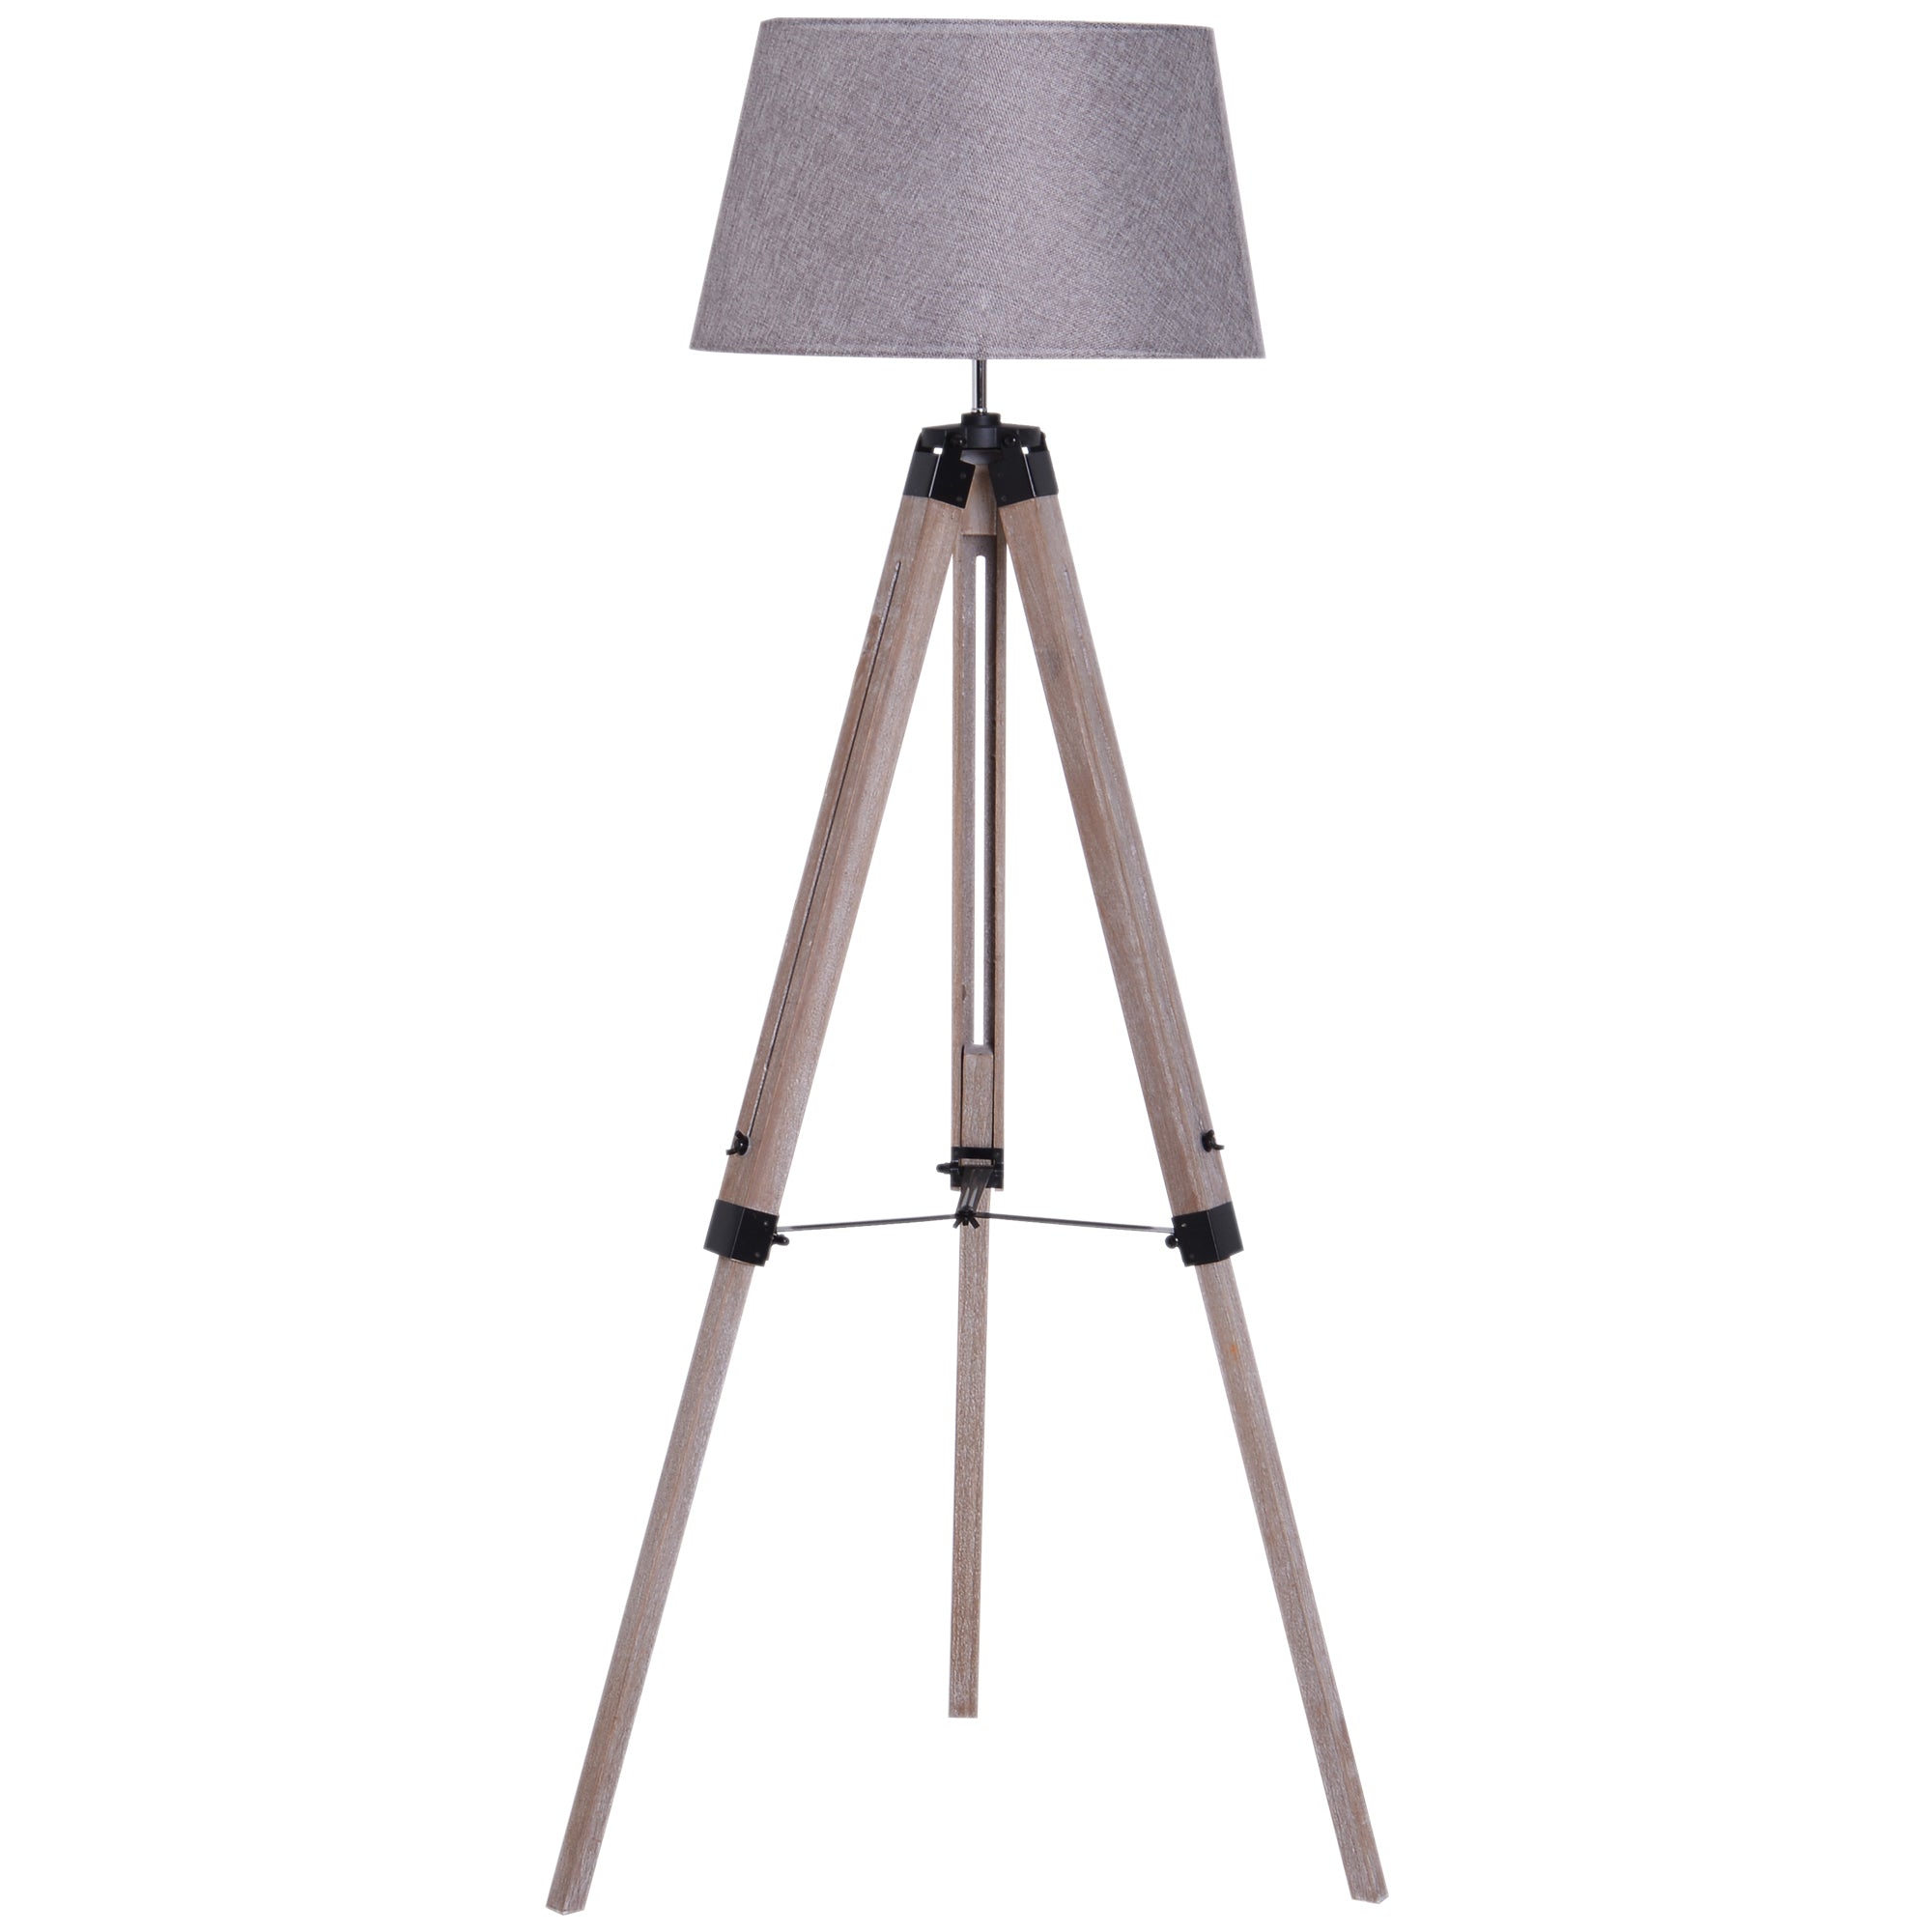 Wooden Adjustable Tripod Free Standing Floor Lamp  Bedside Light E27 Bulb Compatible  AOSOM   